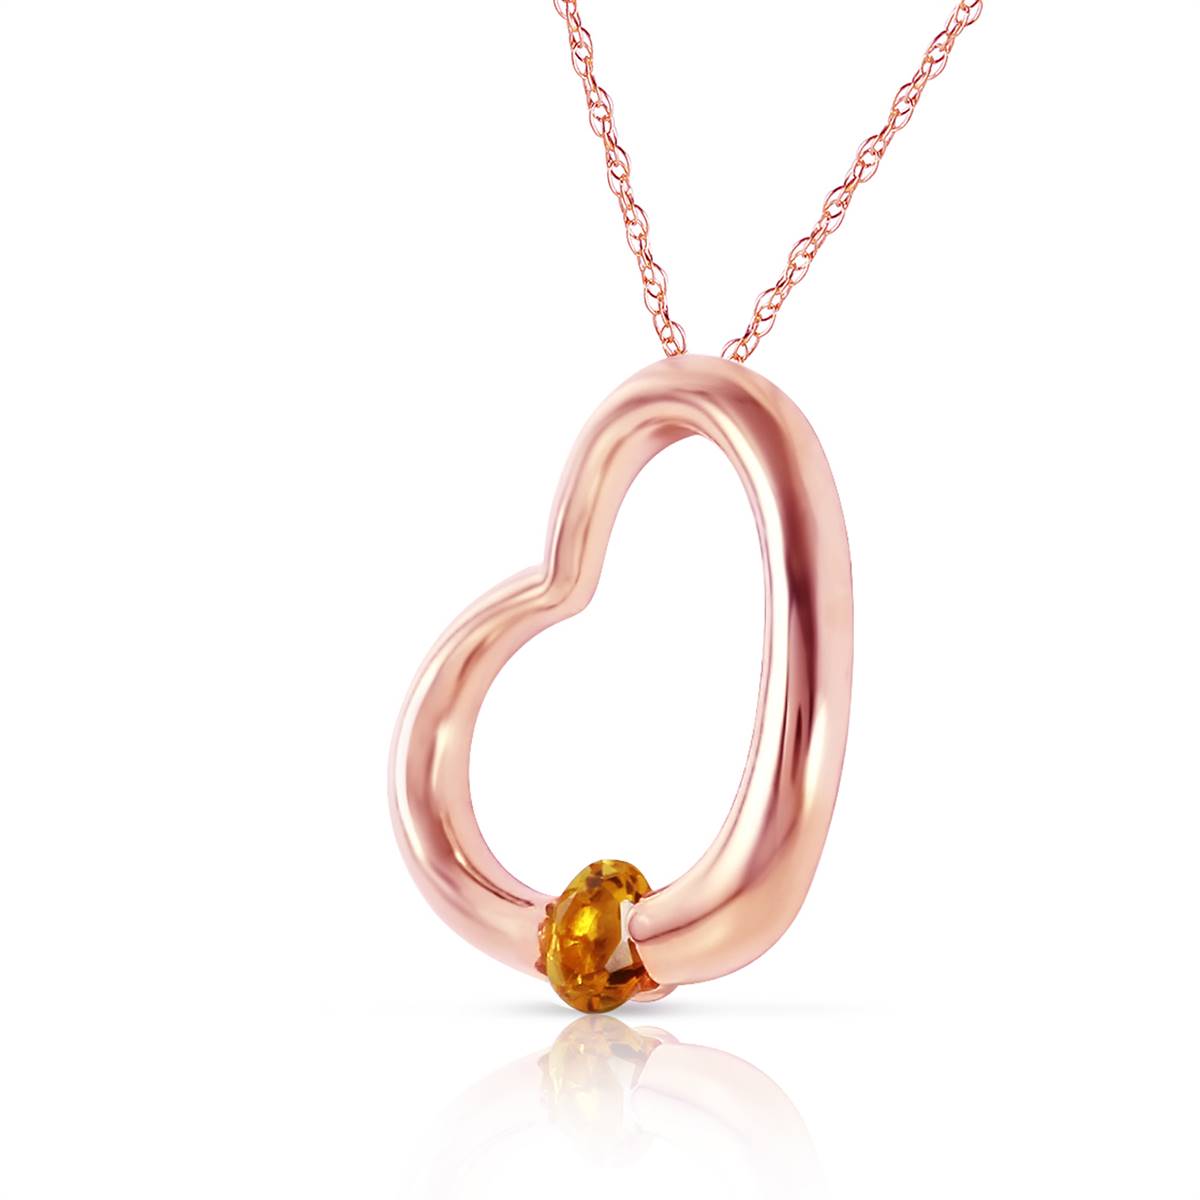 14K Solid Rose Gold Heart Necklace w/ Natural Citrine